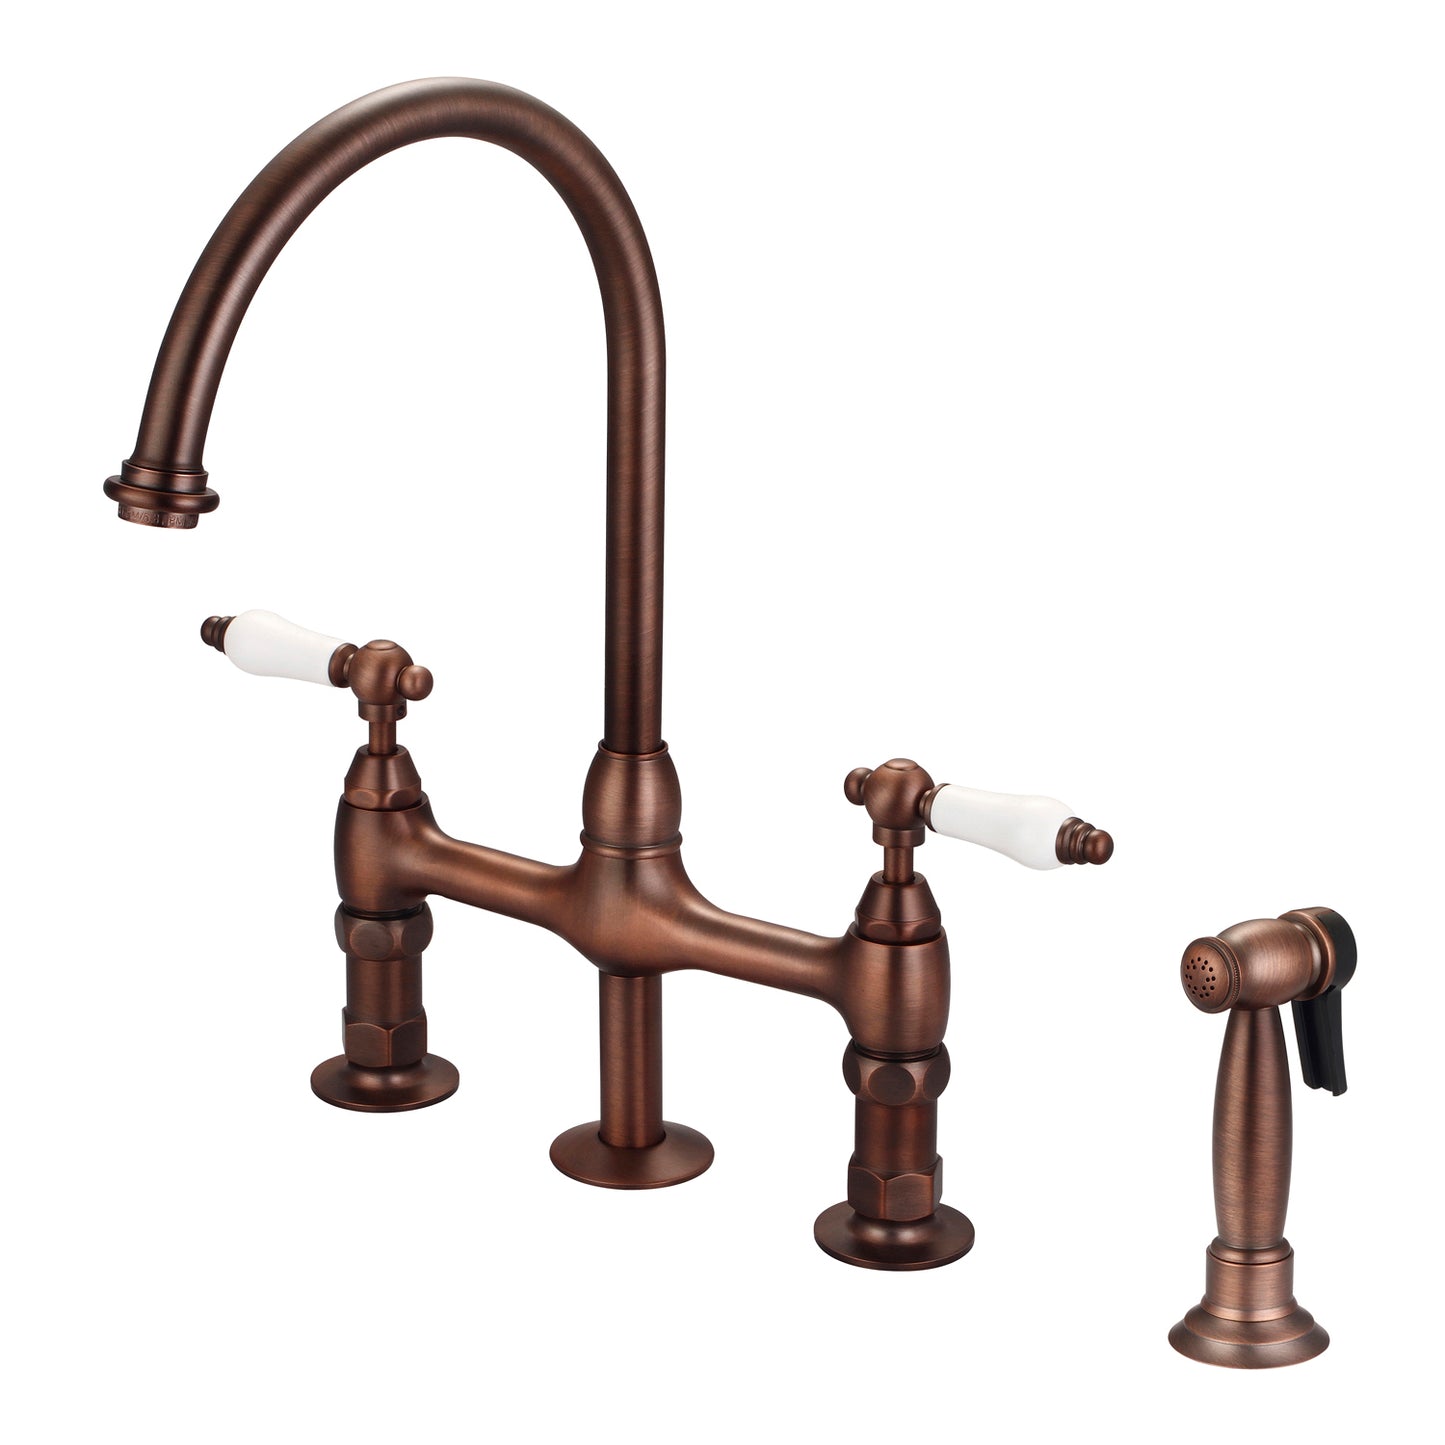 Harding Kitchen Bridge Faucet, Sidesprayer & Porcelain Lever Handles, Oil Rubbed Bronze